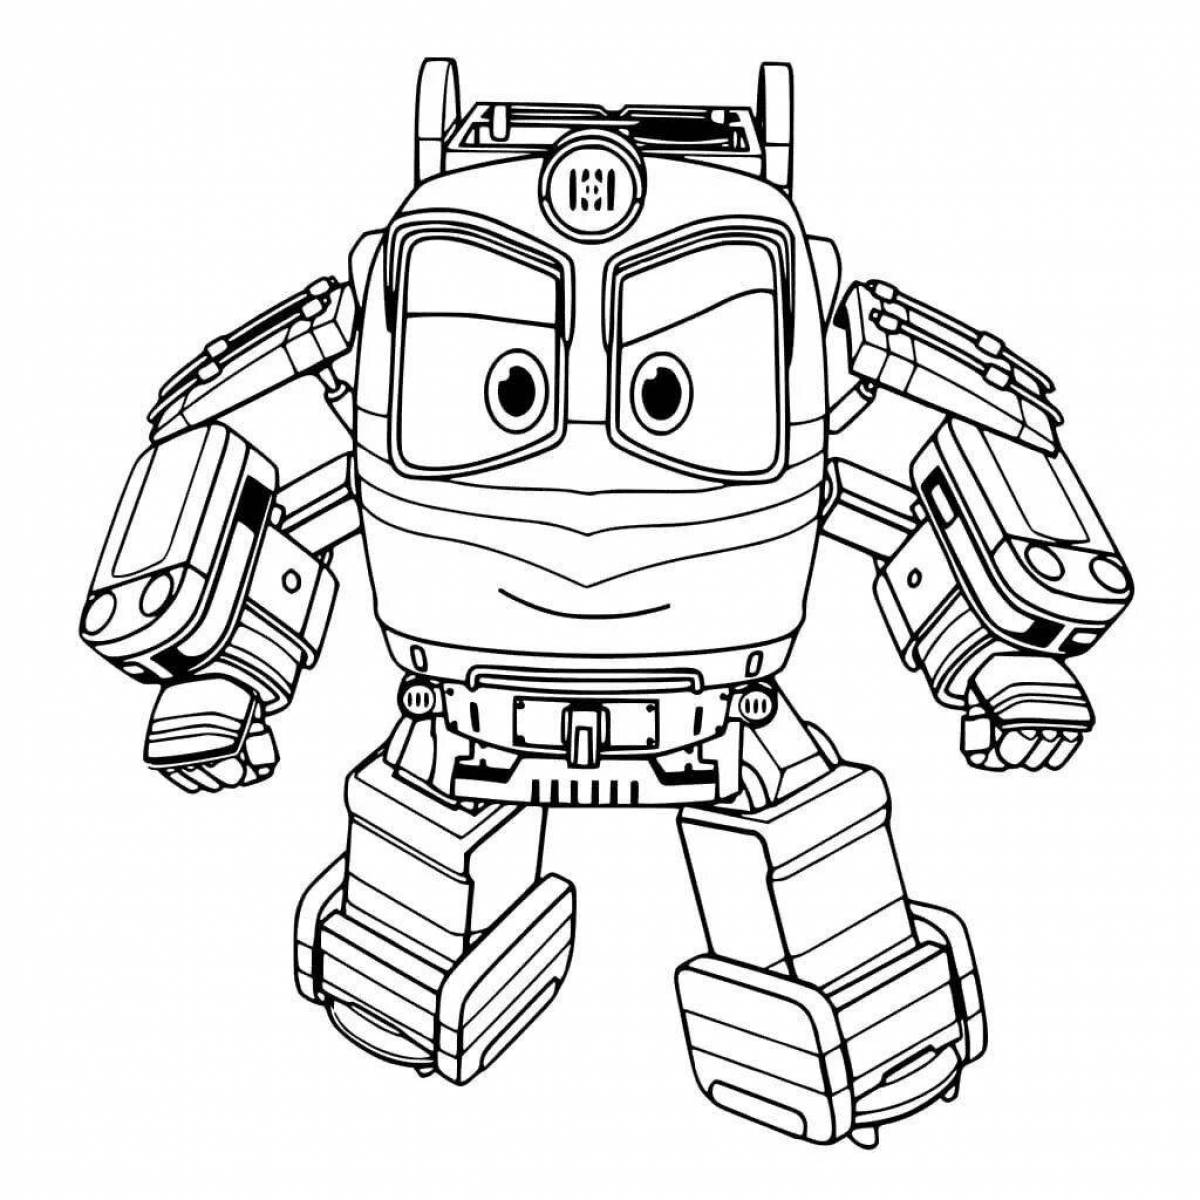 Victor train robots #6